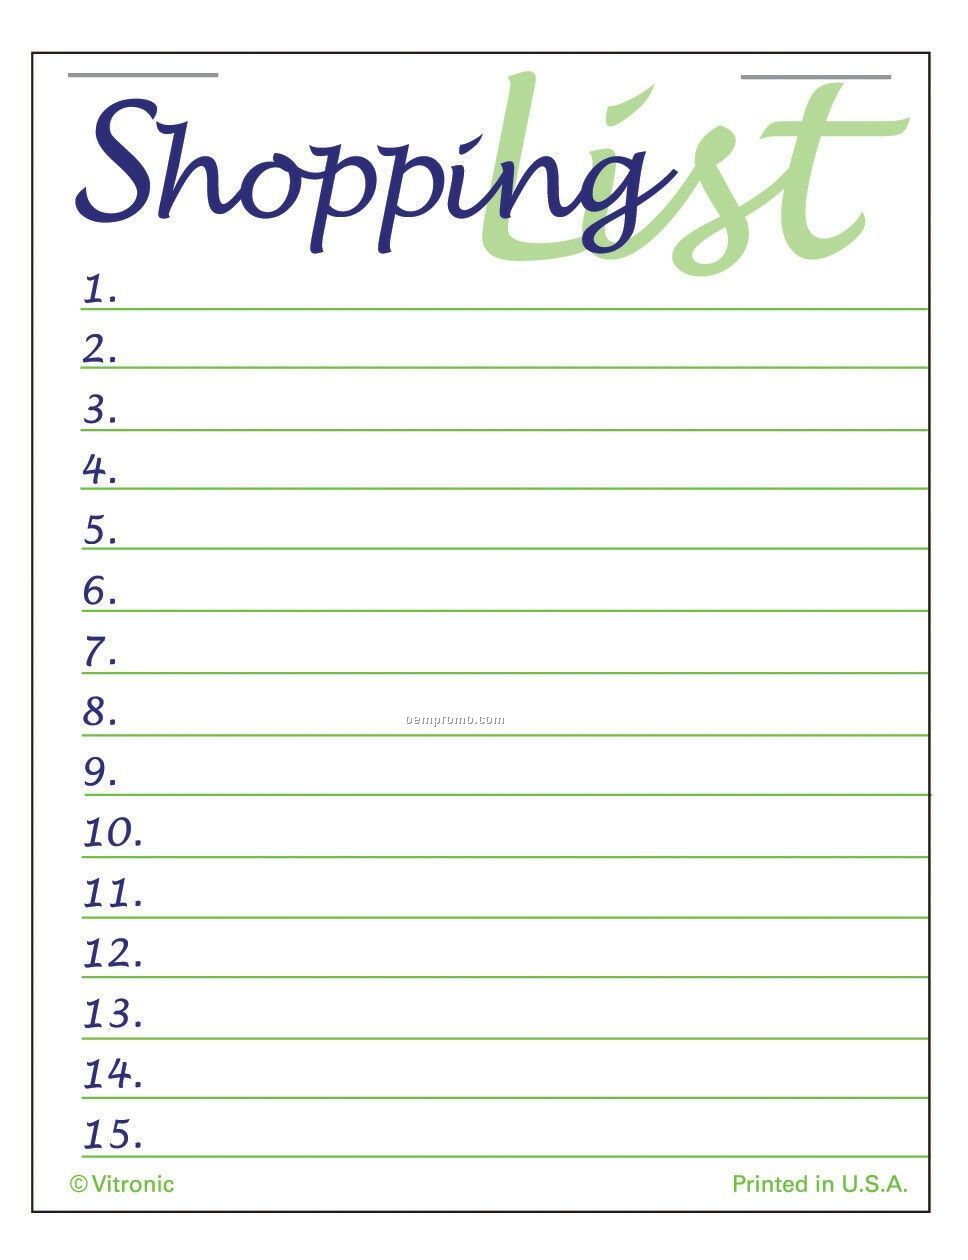 Shopping List Press-n-stick (Thru 8/1/11)